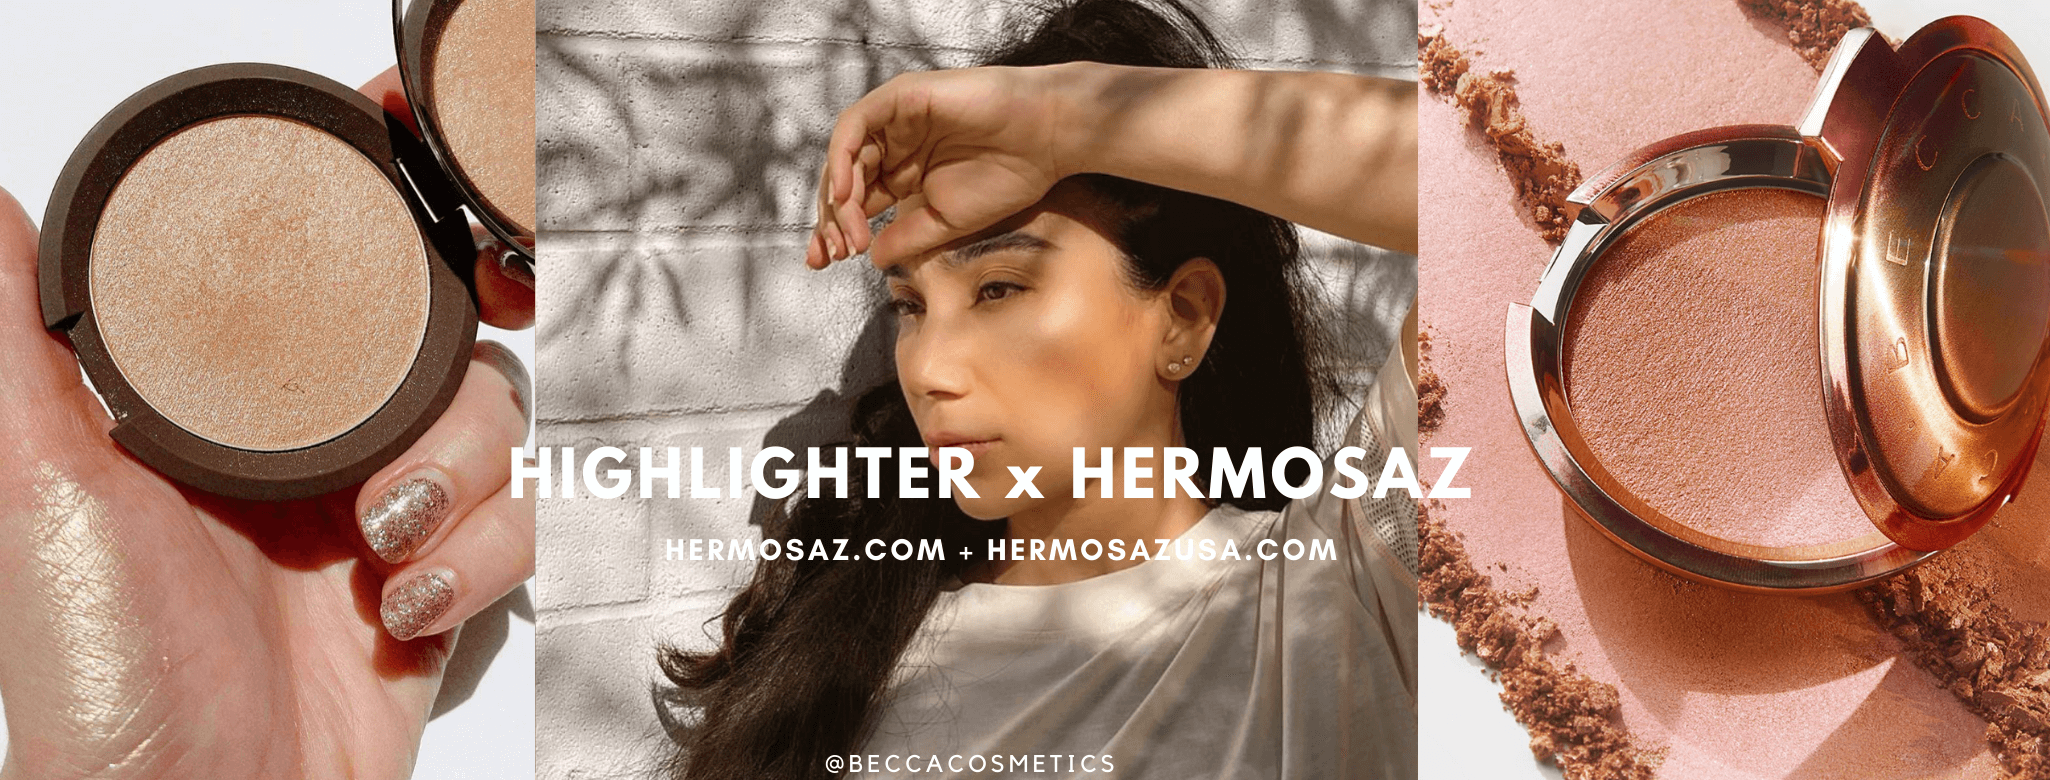 Highlighter x Hermosaz